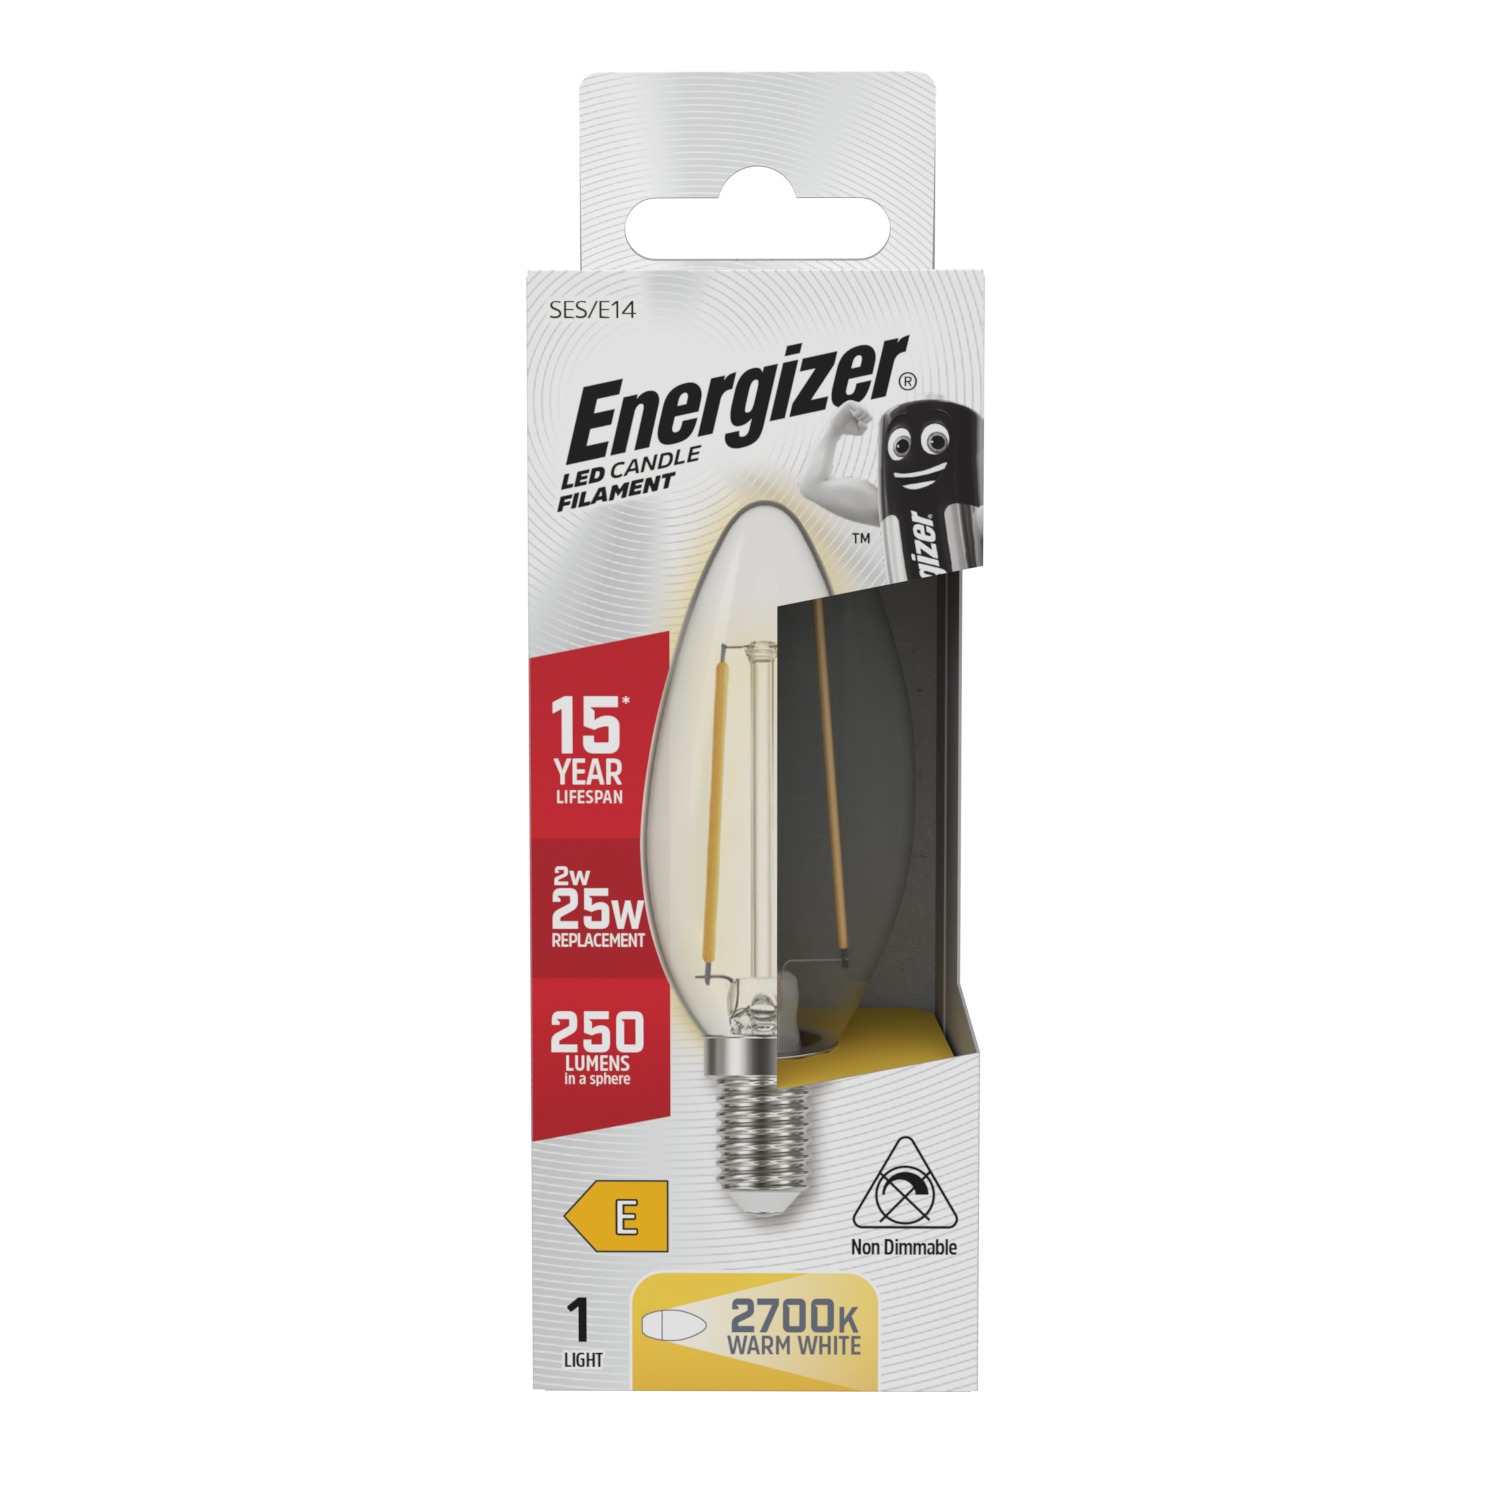 Energizer LED Filament Candle E14 (SES) 250lm 2W 2,700K (Warm White), Box of 1